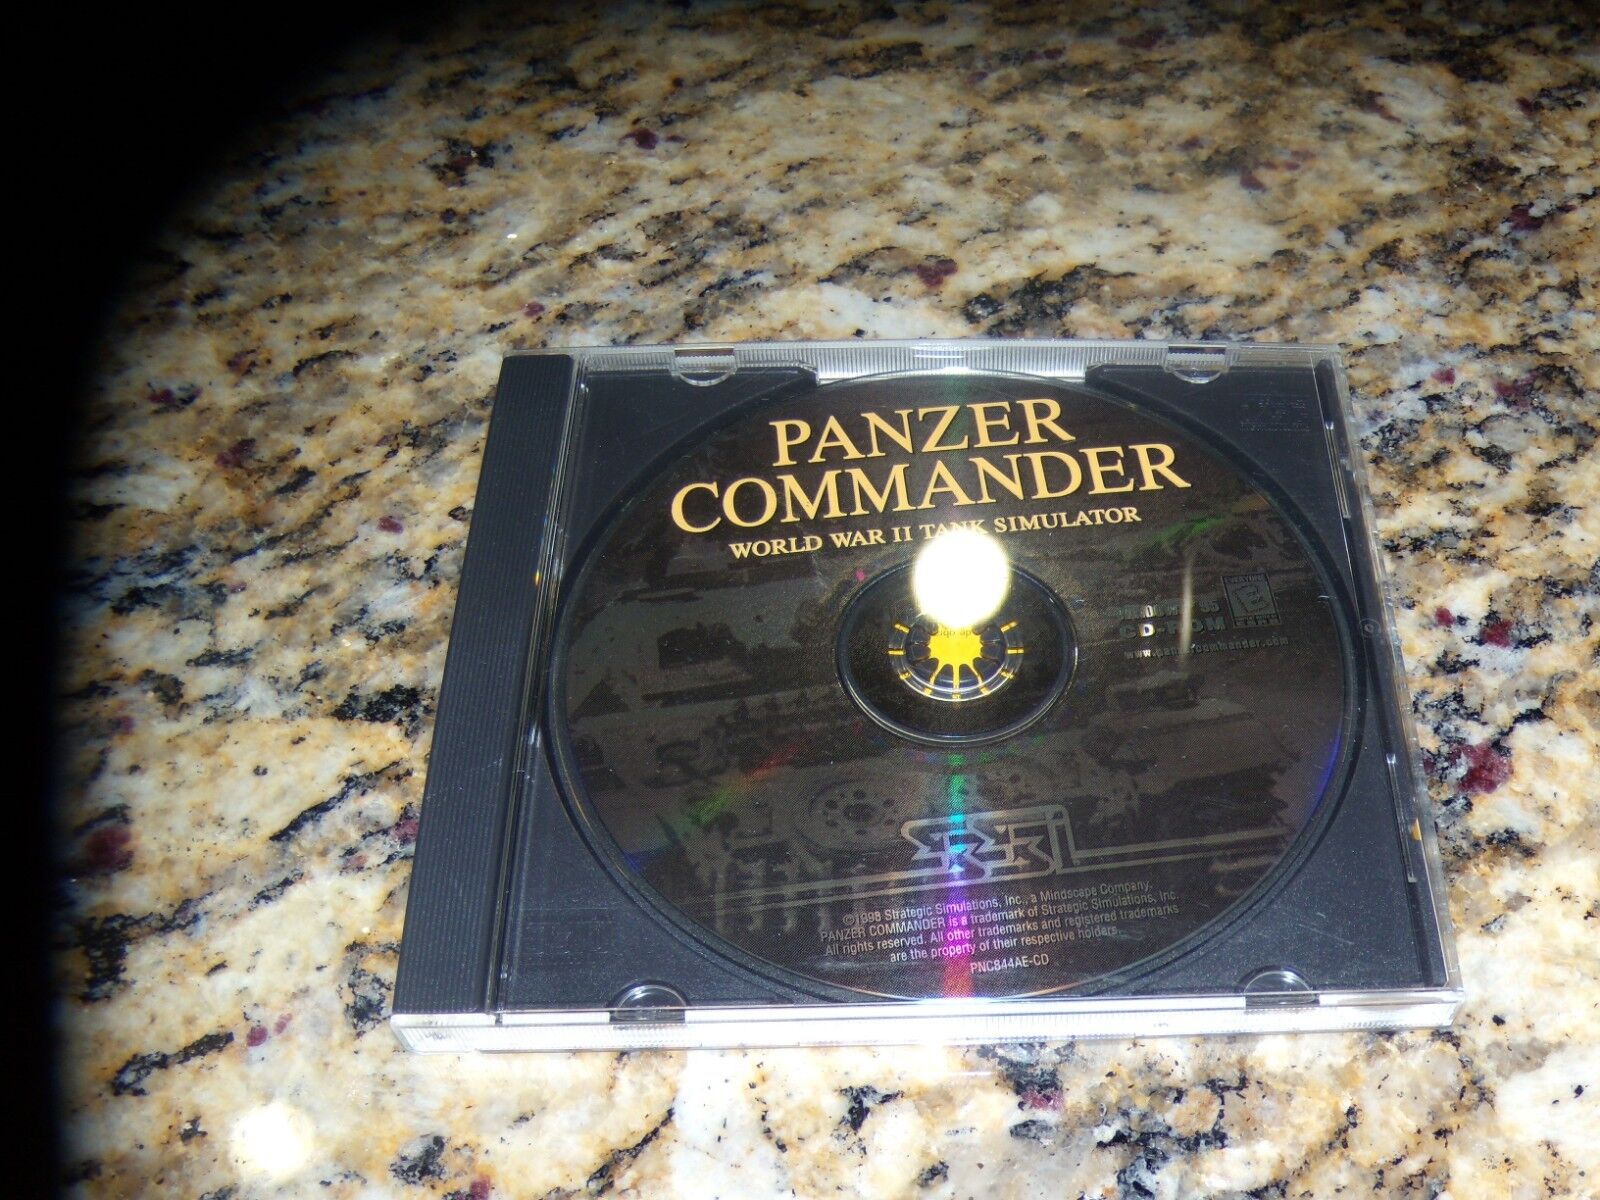 Panzer Commander World War II Tank Simulator (PC, 1998) Near Mint Program